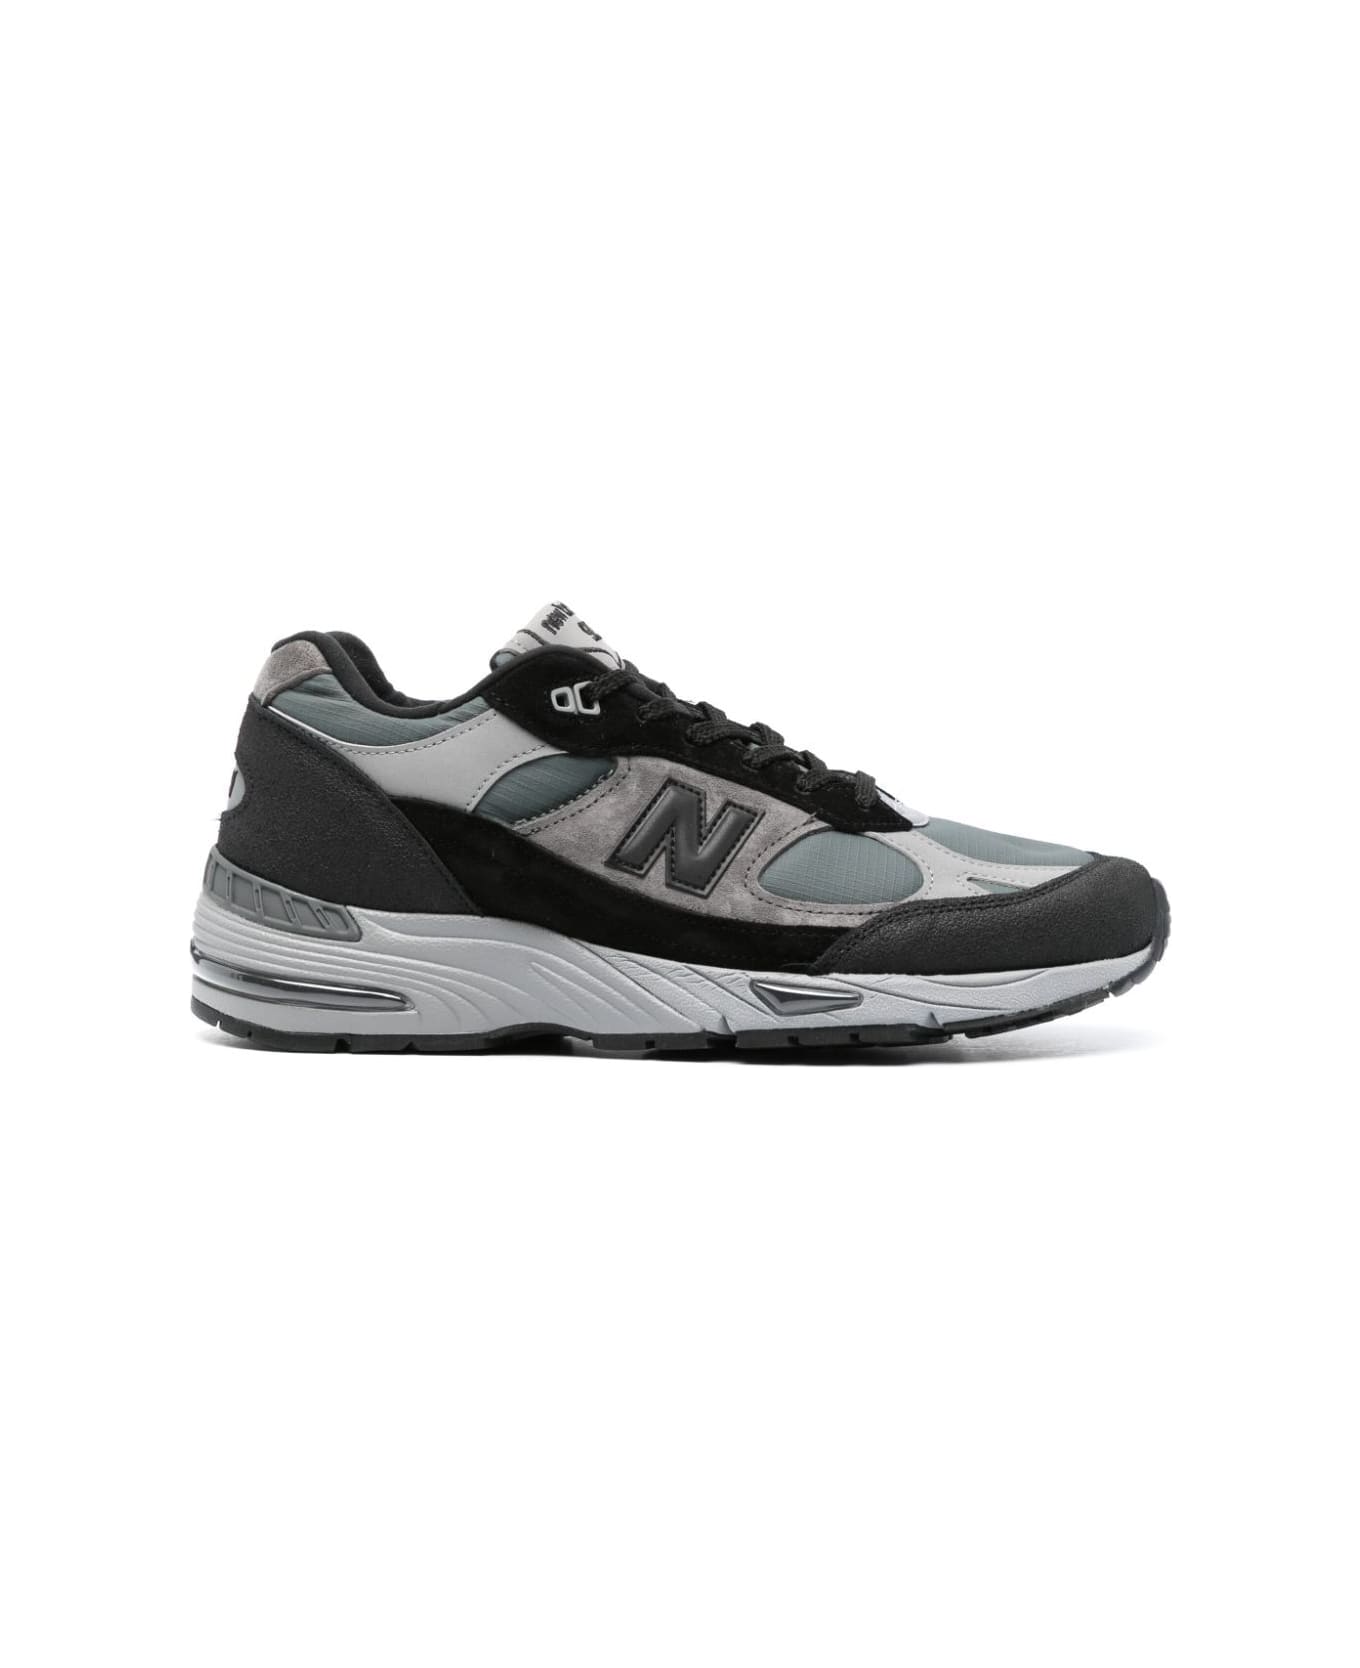 New Balance 991 Lifestyle Sneakers - Black Grey